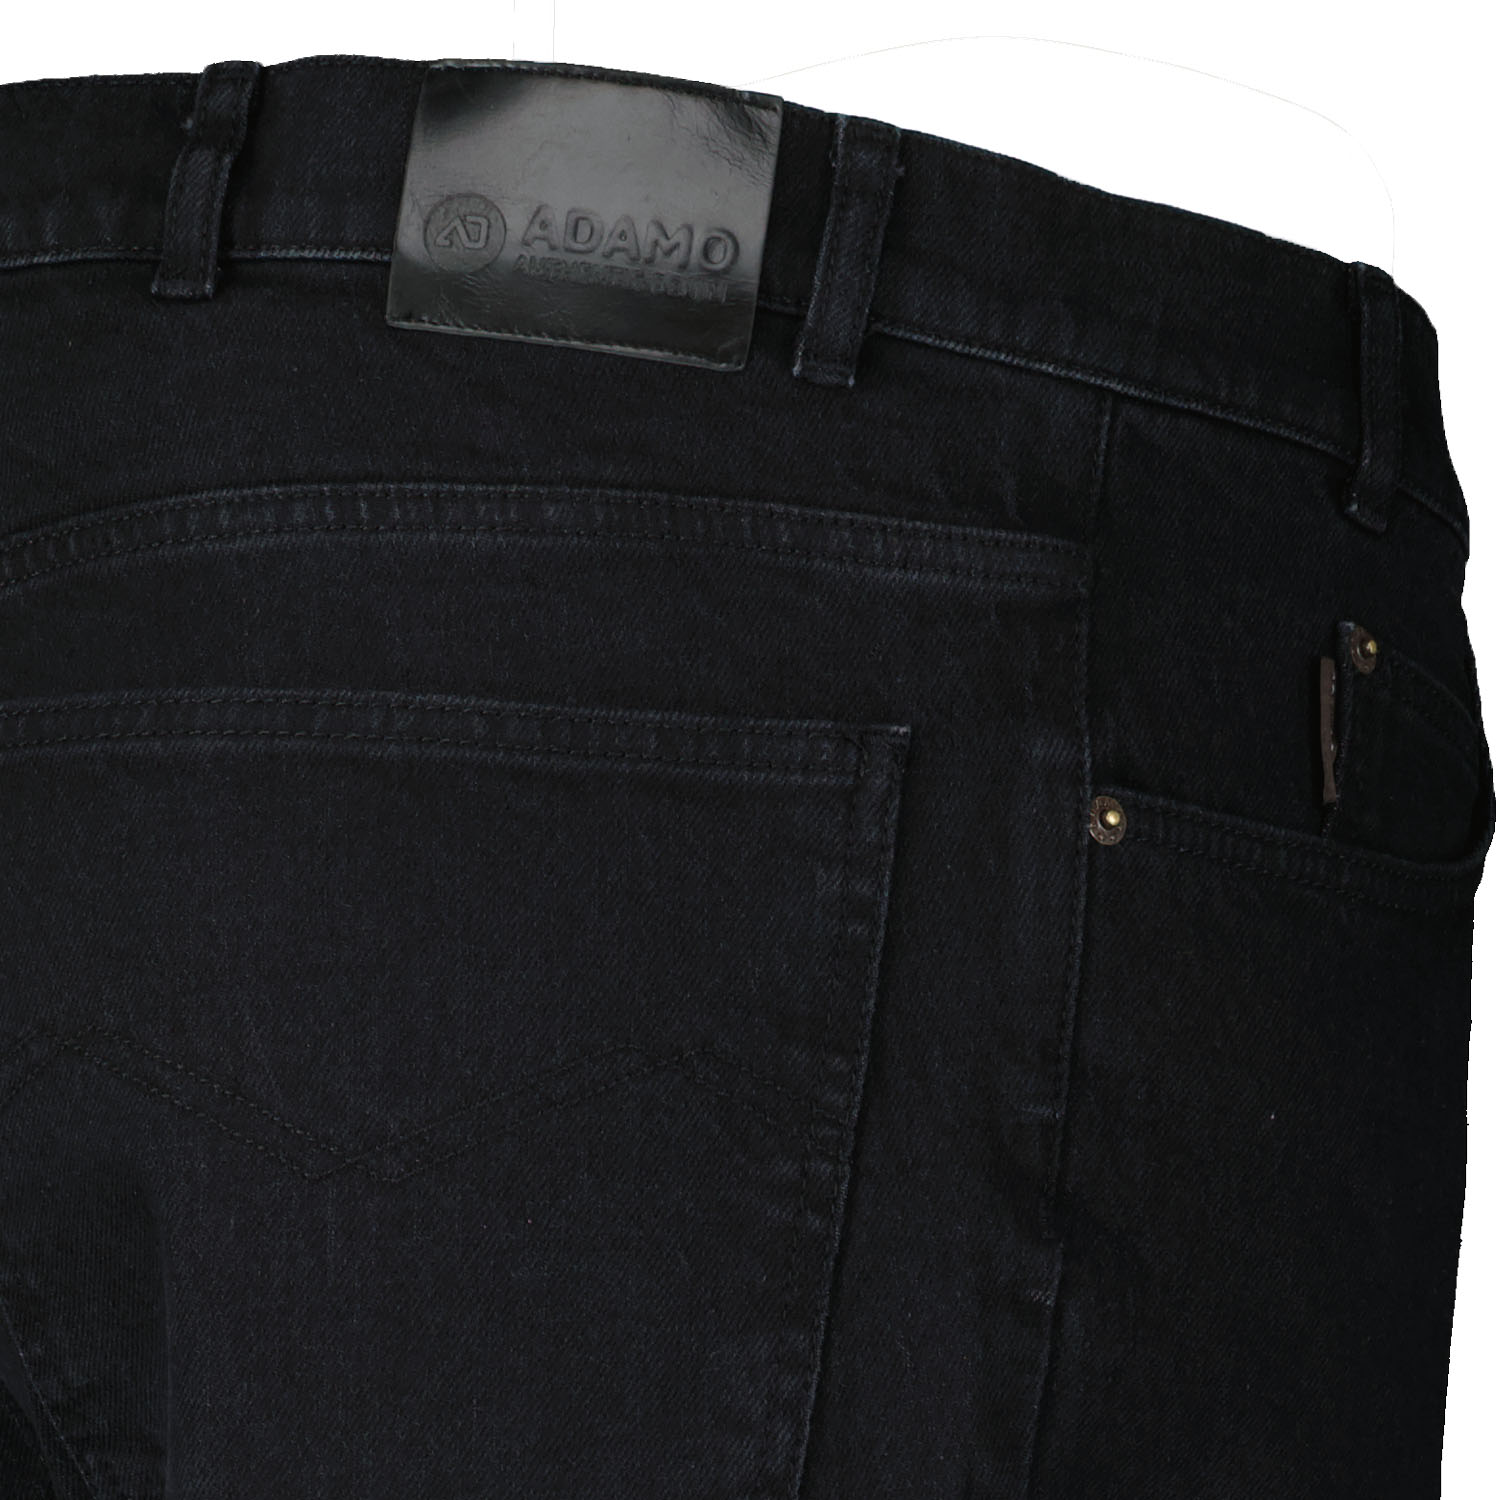 Men's 5-Pocket Jeans Stretch black by Adamo series "Nevada" in oversizes: 56 - 80